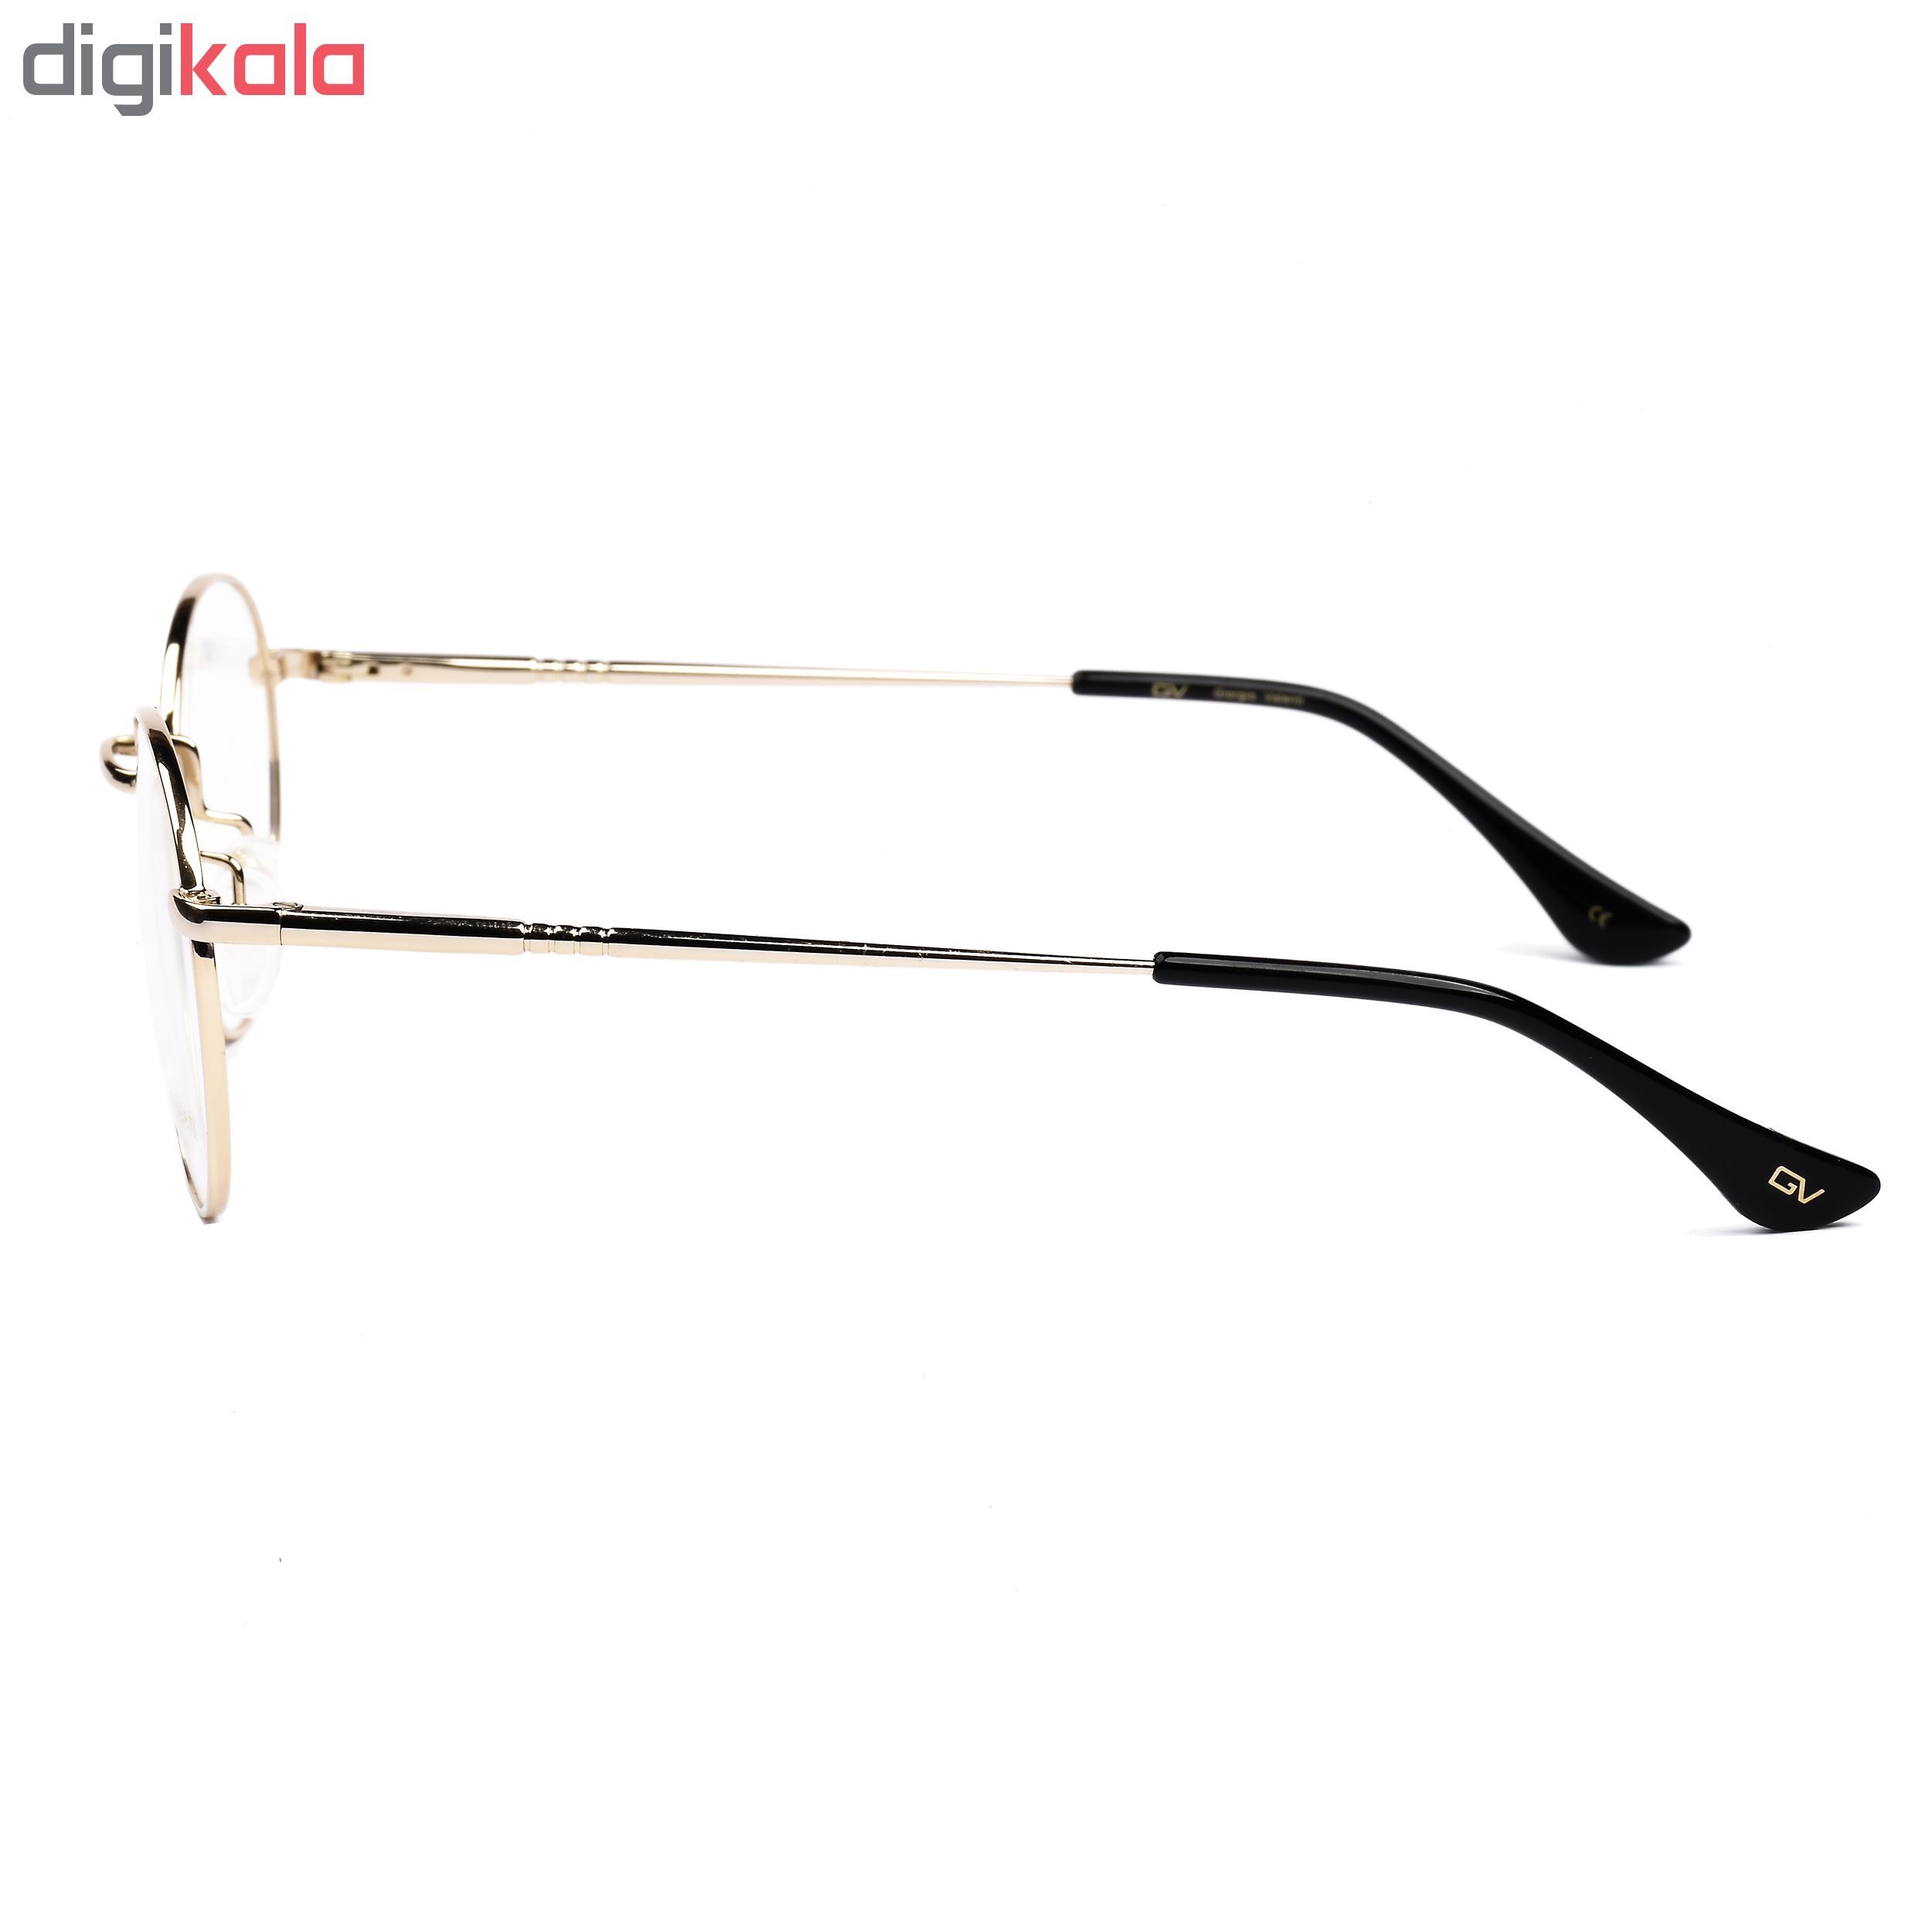 فریم عینک طبی جورجیو والنتی مدل 4400